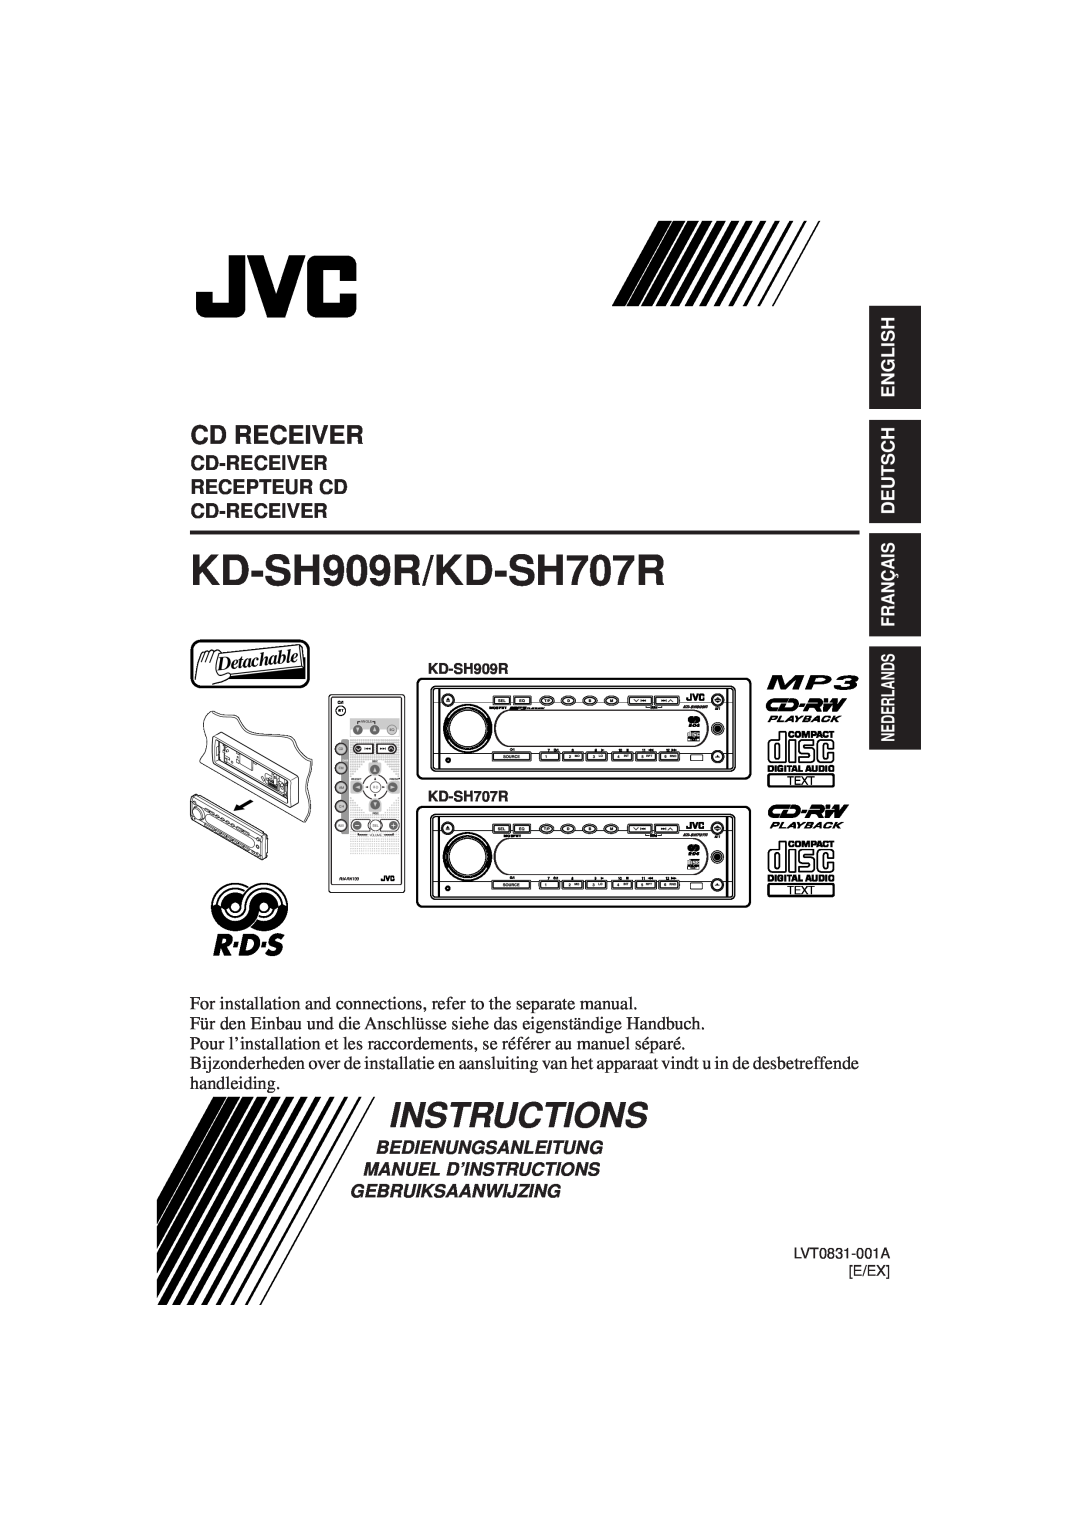 JVC KD-SH707R manual Cd Receiver, Cd-Receiver Recepteur Cd Cd-Receiver, Nederlands Français Deutsch English, Instructions 